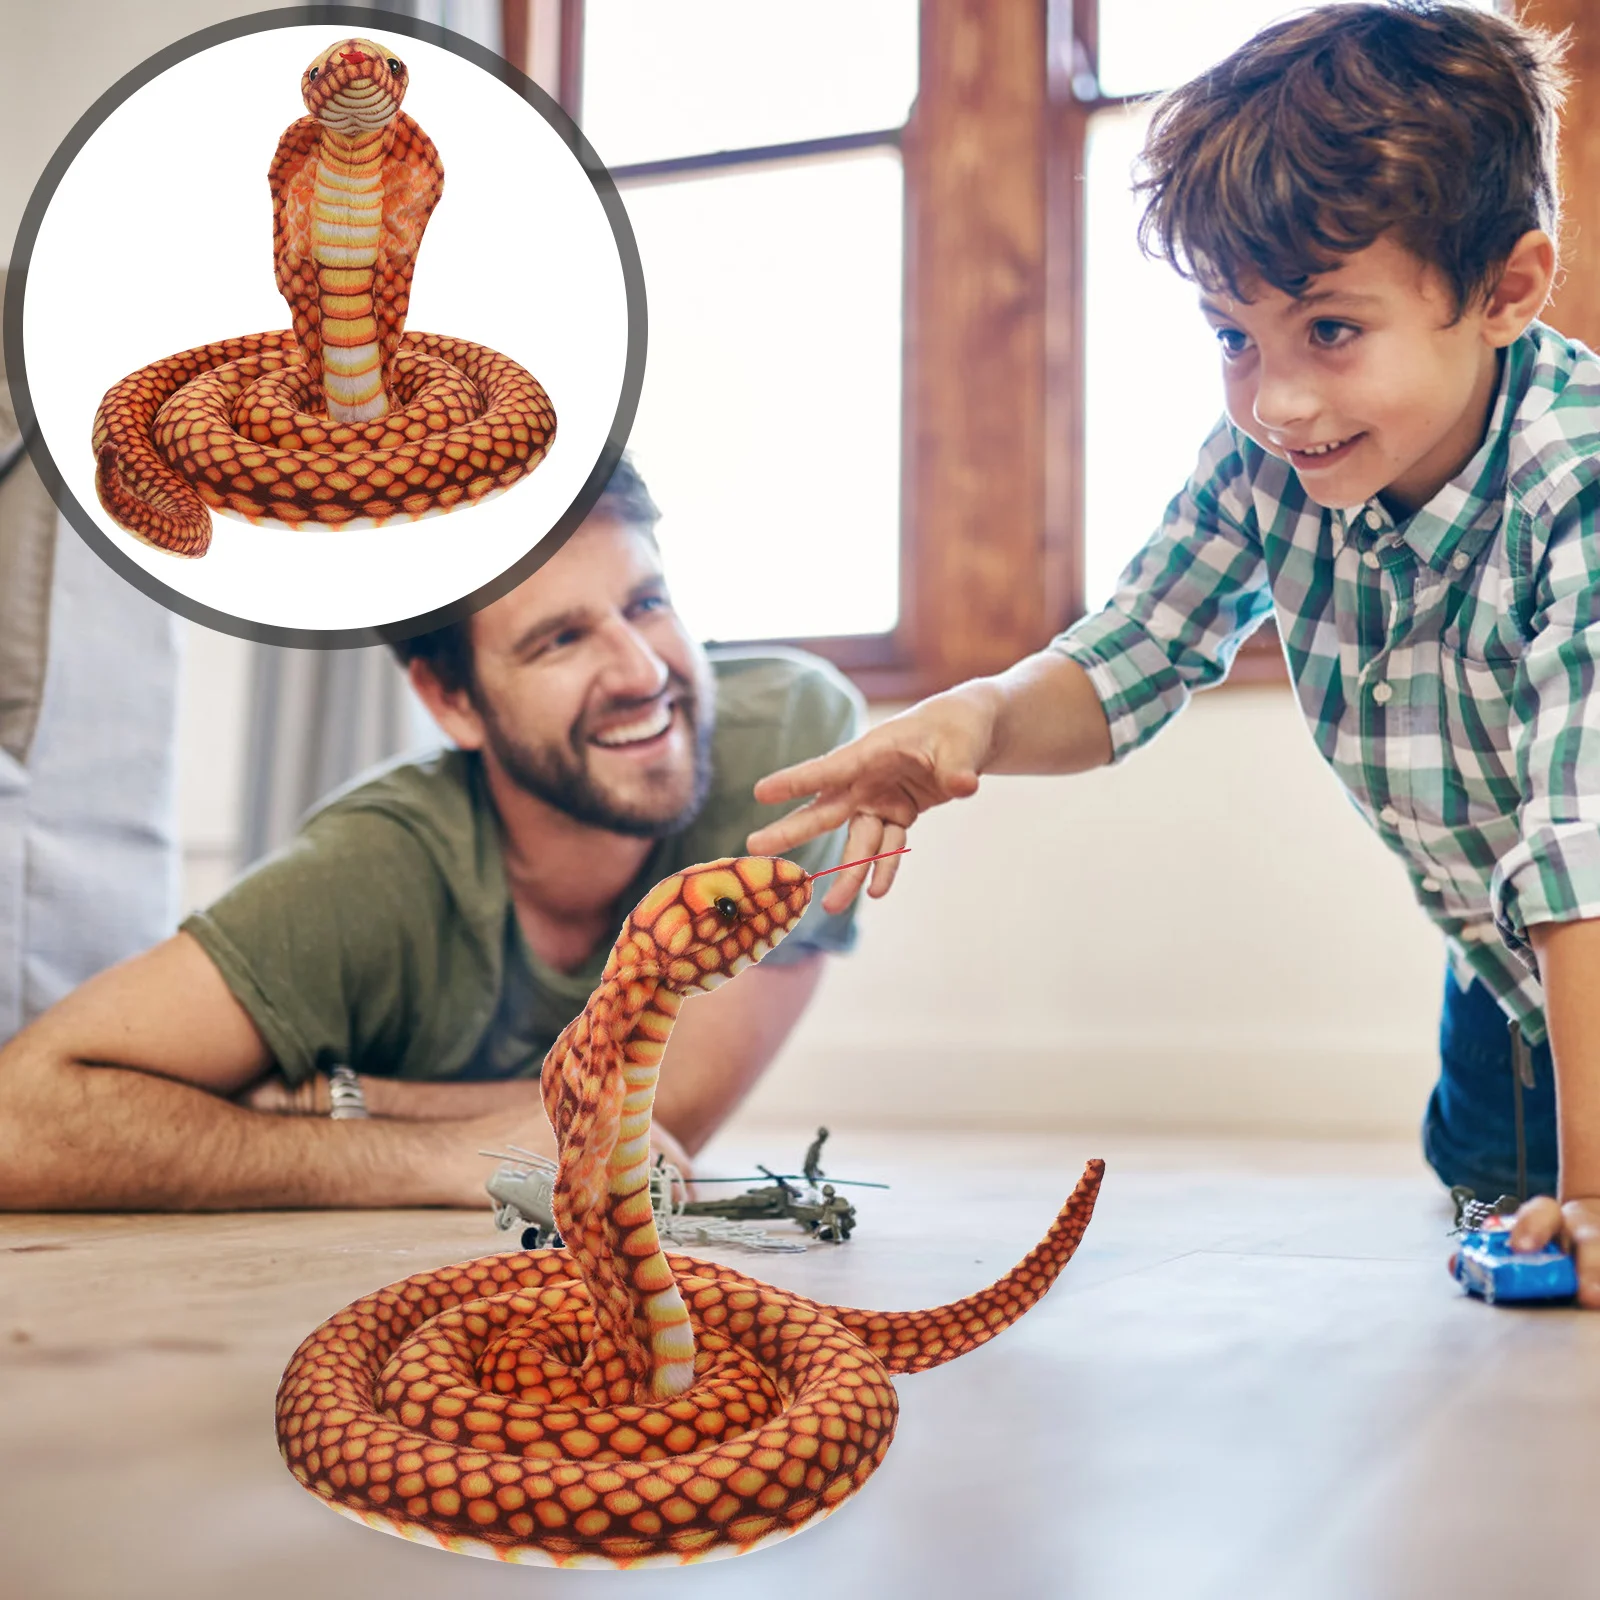 

Plush Snake Toy Plush Snake Plaything Simulated Snake Toy Animal Plush Plaything Cobra Zoo Golden Python Cobra Plush Toy